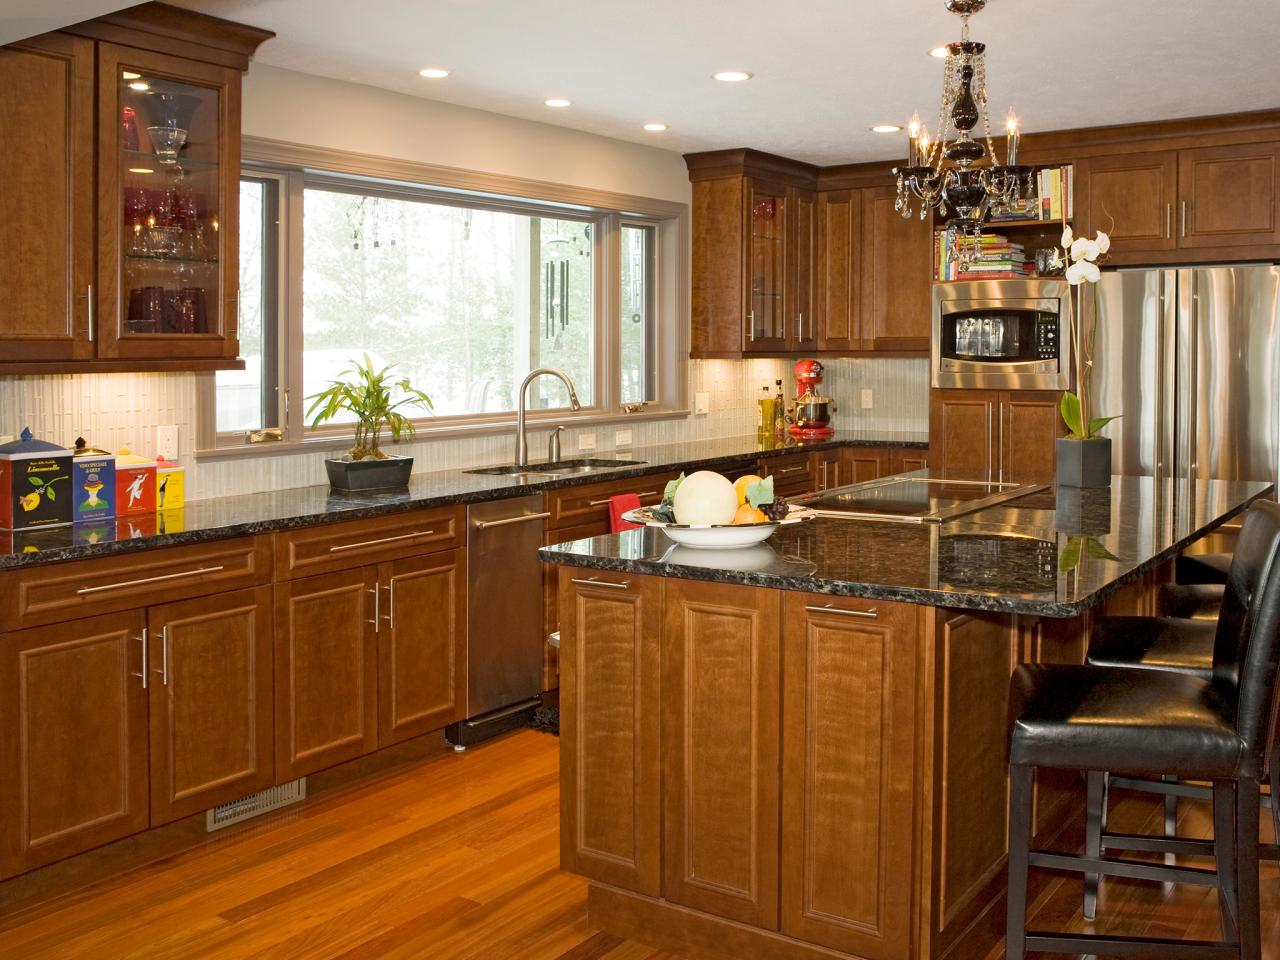 Pictures of Dark Wood Kitchen Cabinets With Patterned Backsplash kitchen cabinet design ideas